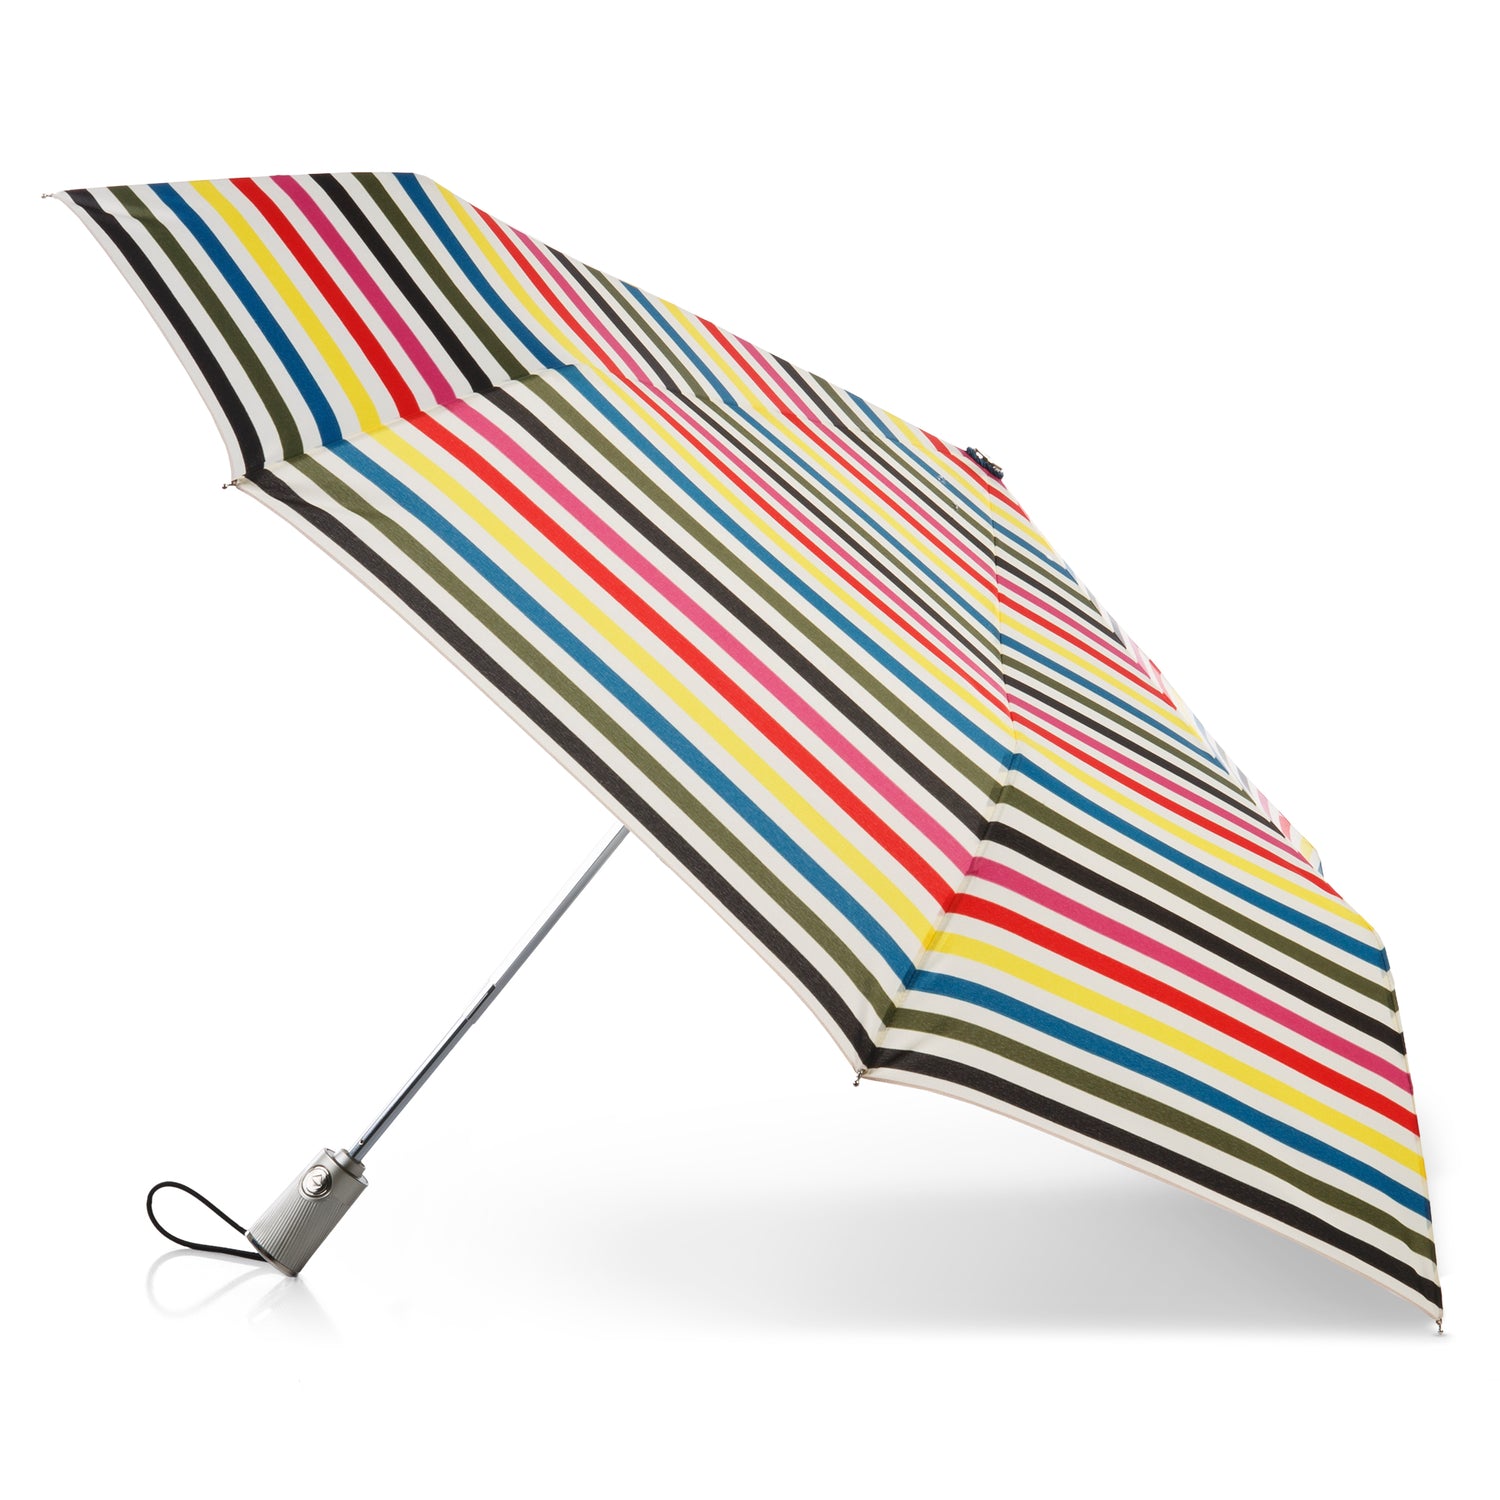 Large SunGuard® Umbrella with Auto Open/Close Technology